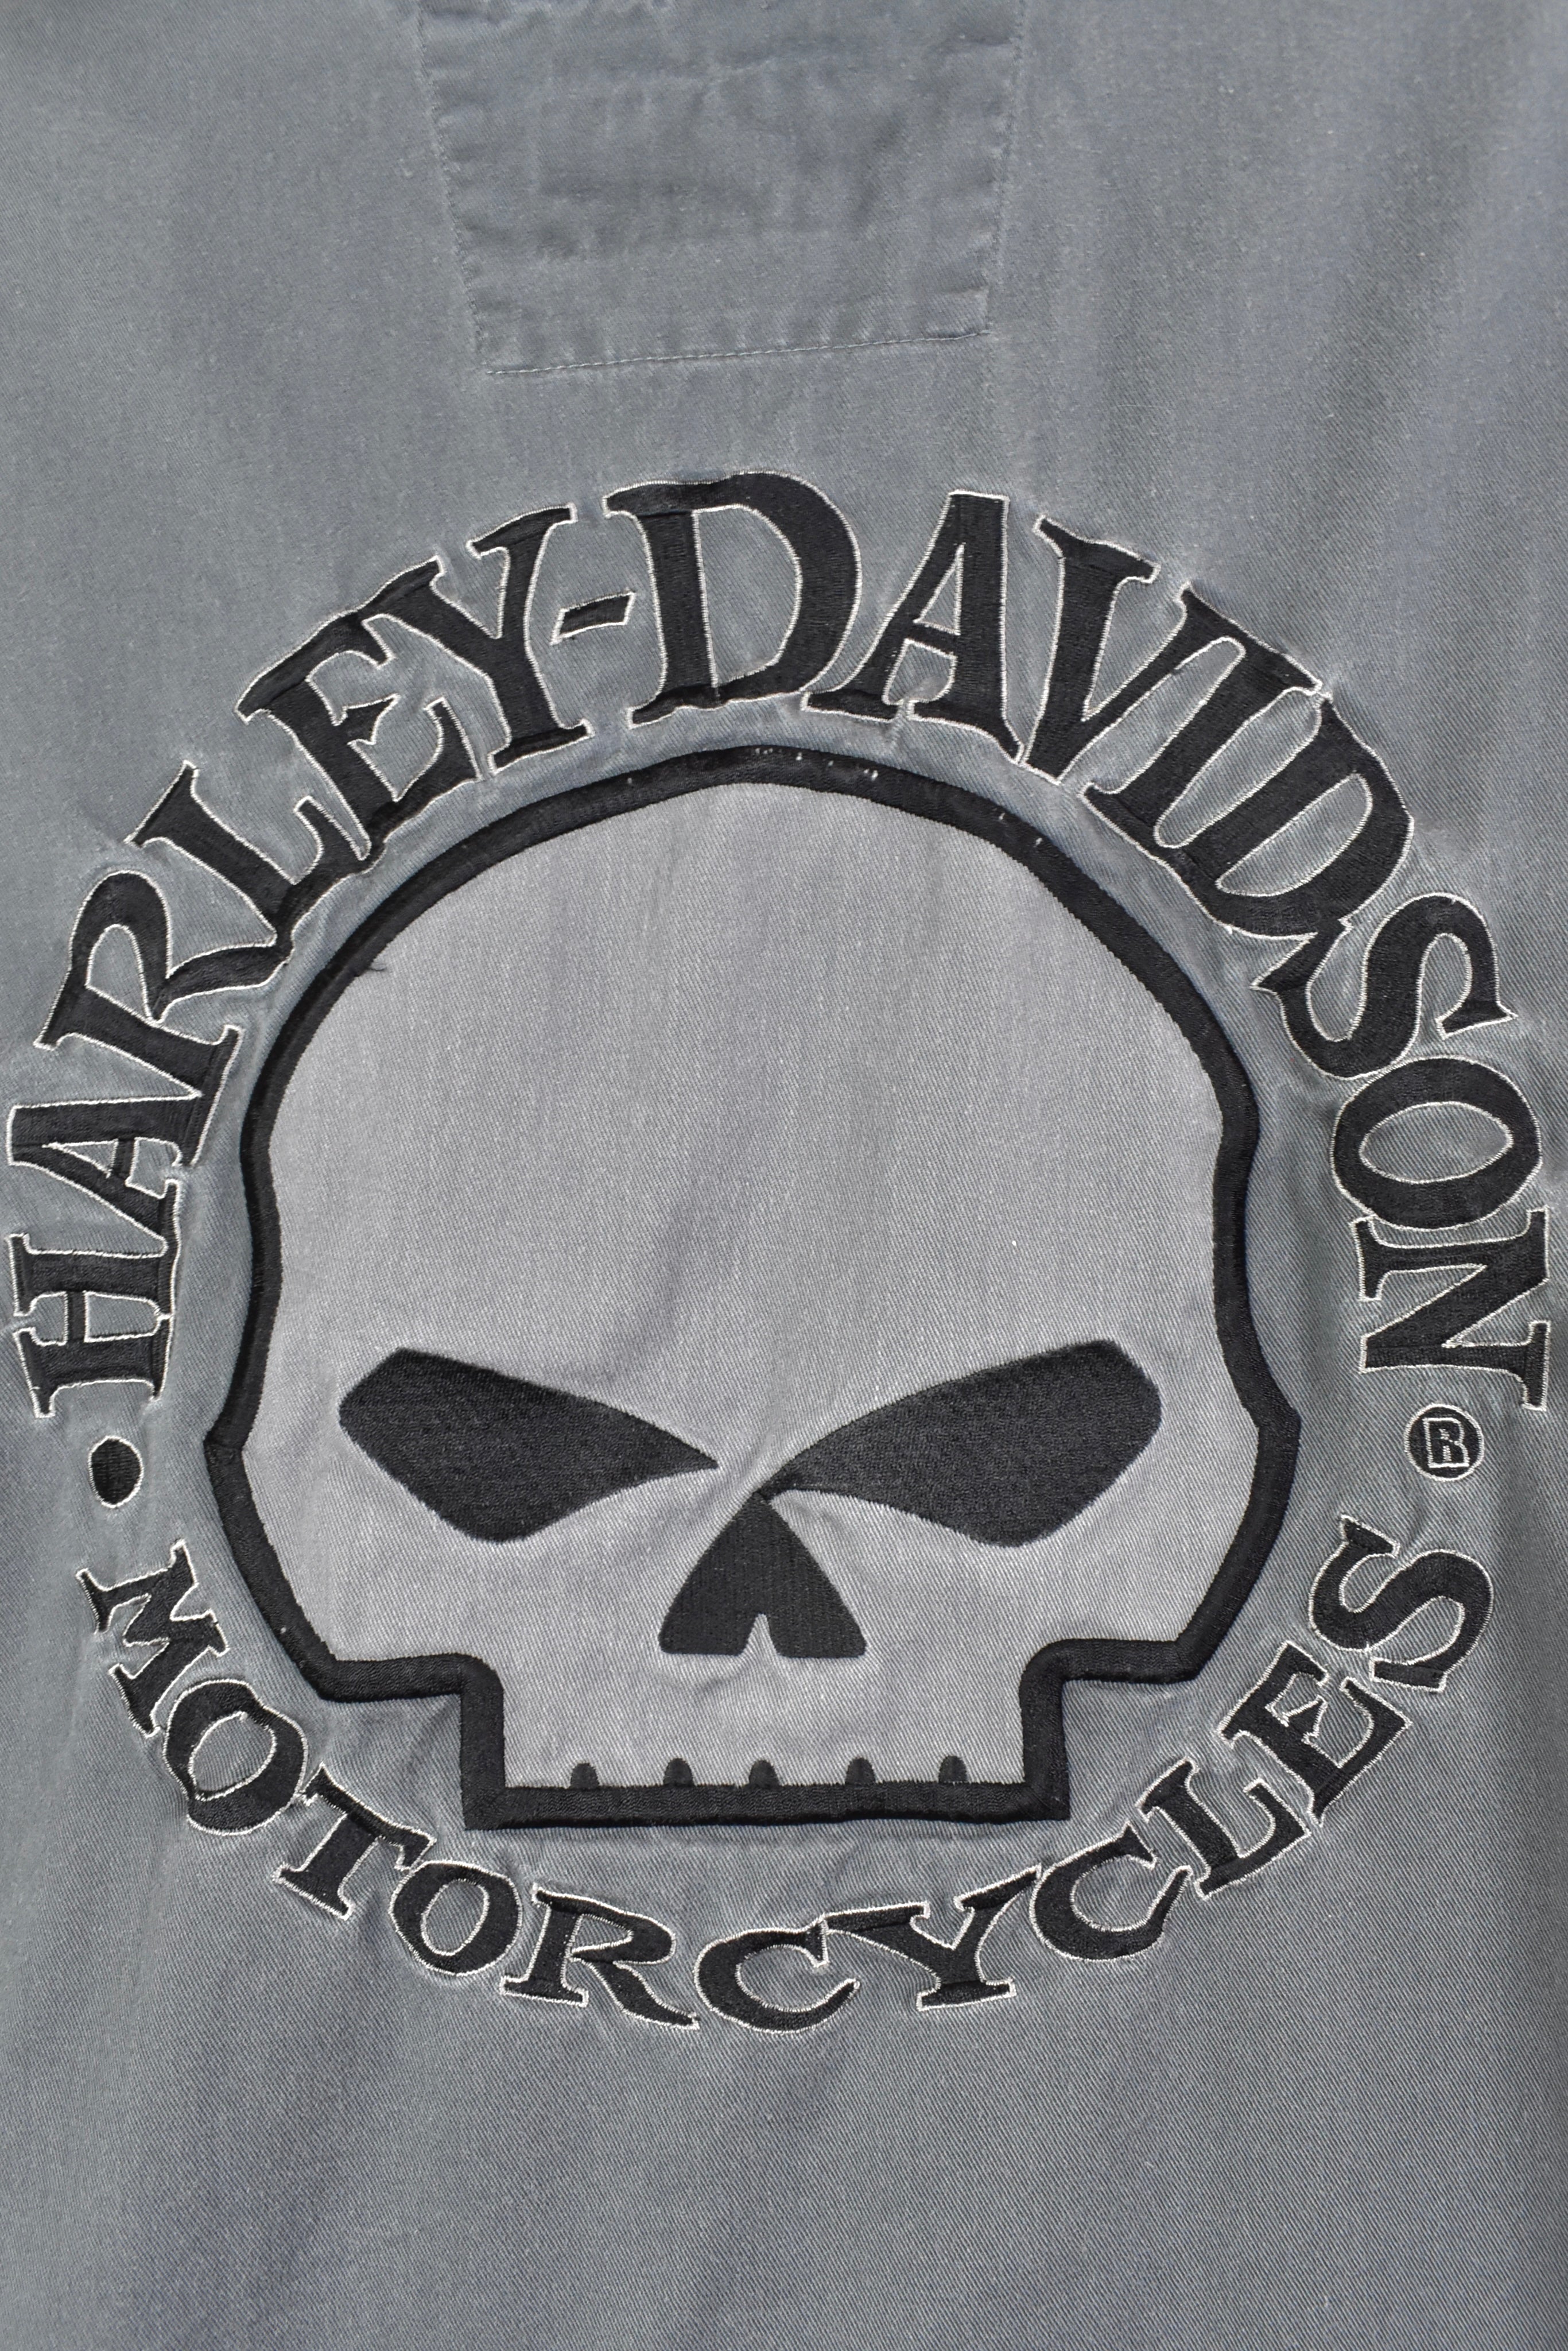 Modern Harley Davidson shirt, button up collared embroidered tee - AU XL HARLEY DAVIDSON